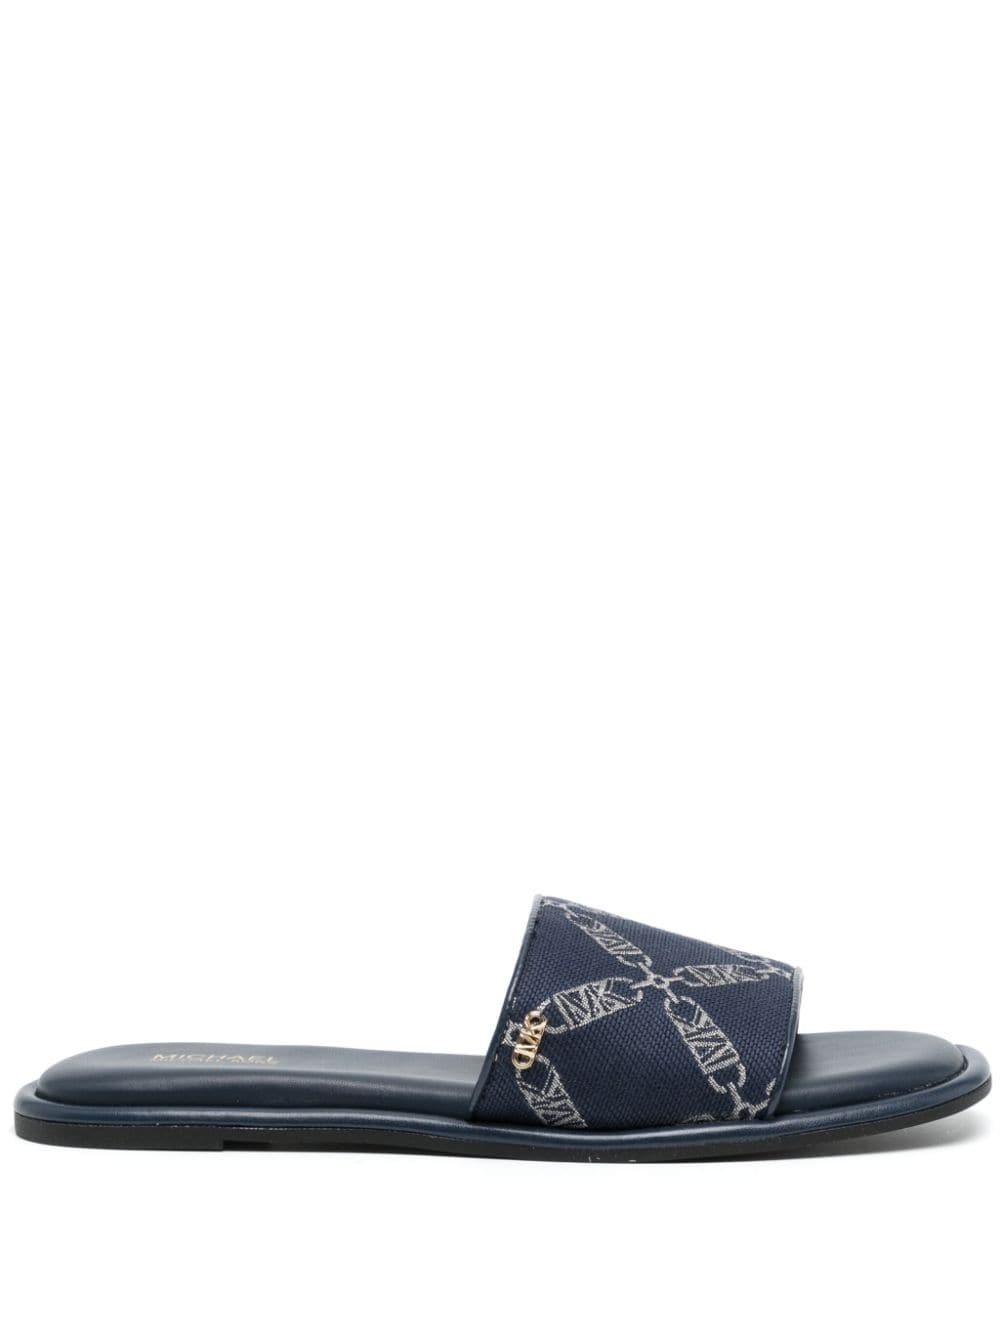 Michael Kors Hayworth slippers met logoplakkaat - Blauw